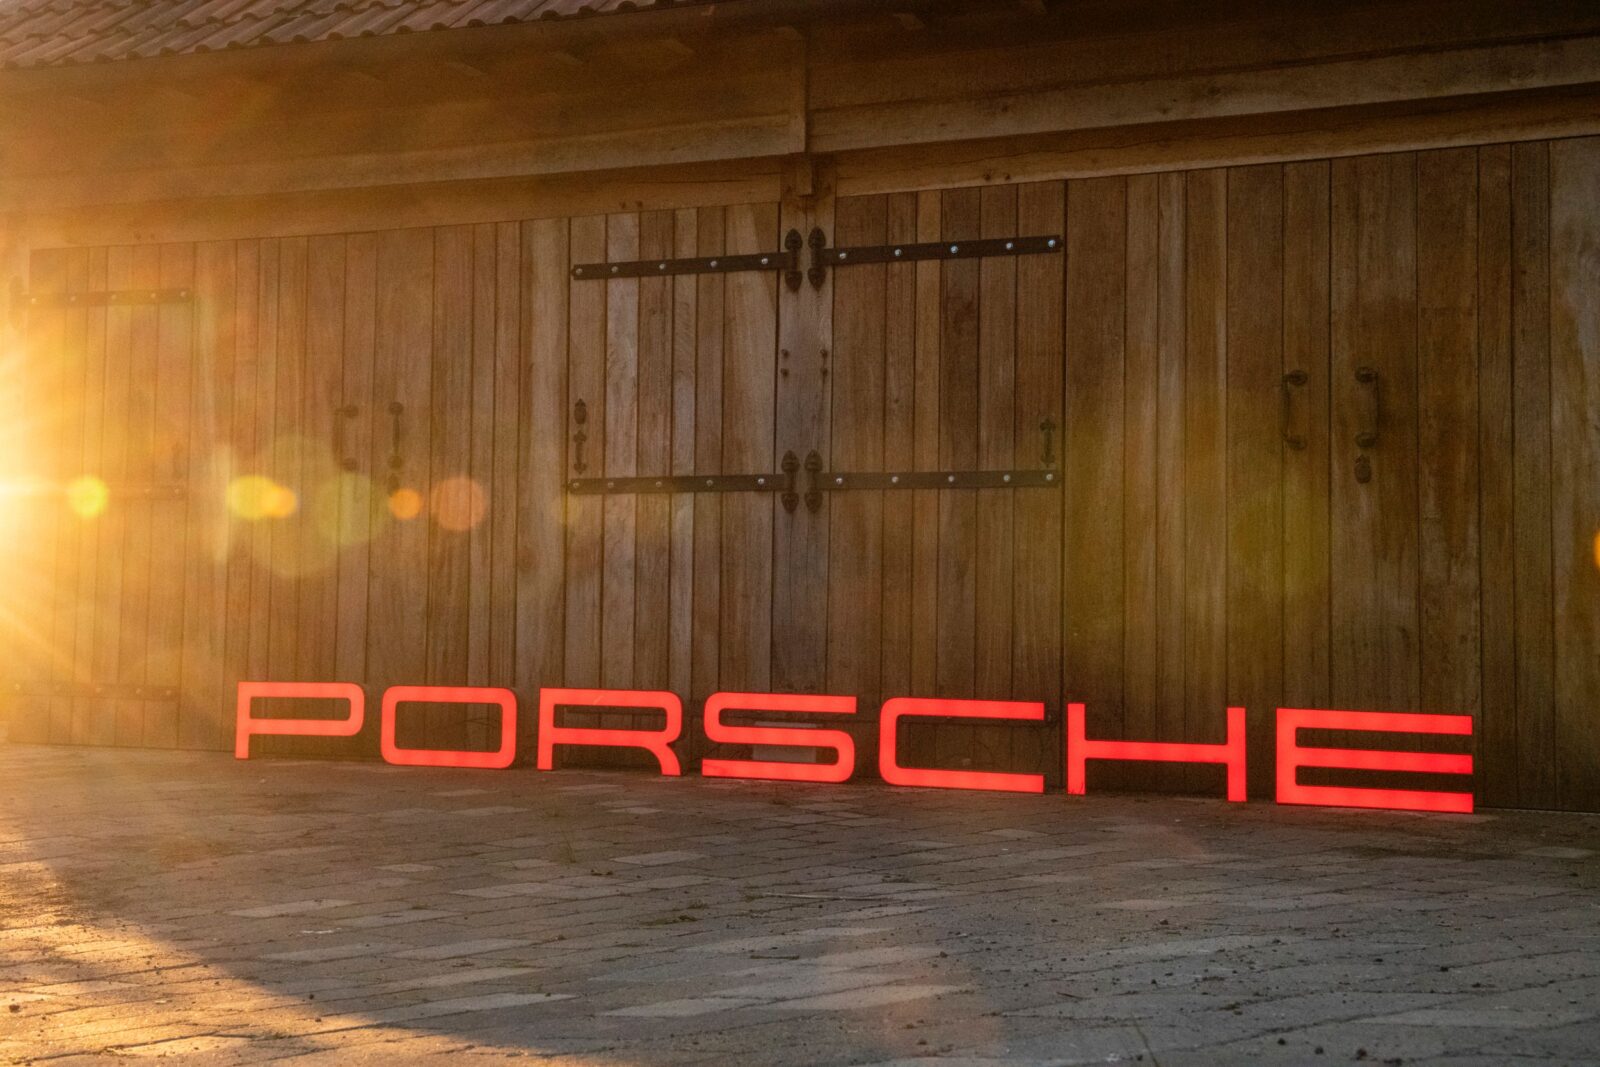 Porsche Dealership Sign